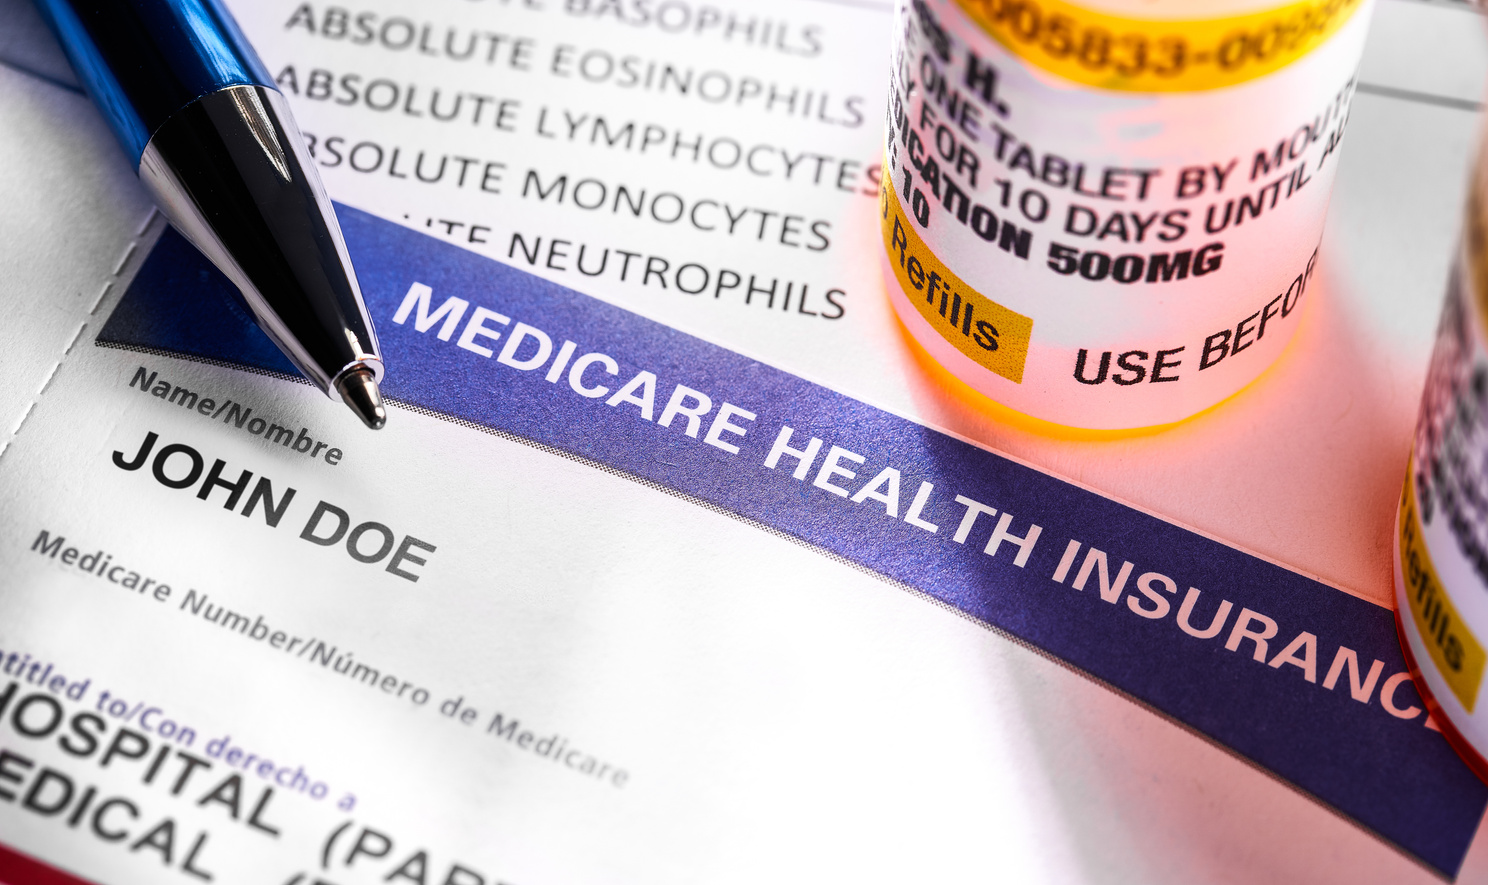 Medicare Health Insurance Card with medicine bottles